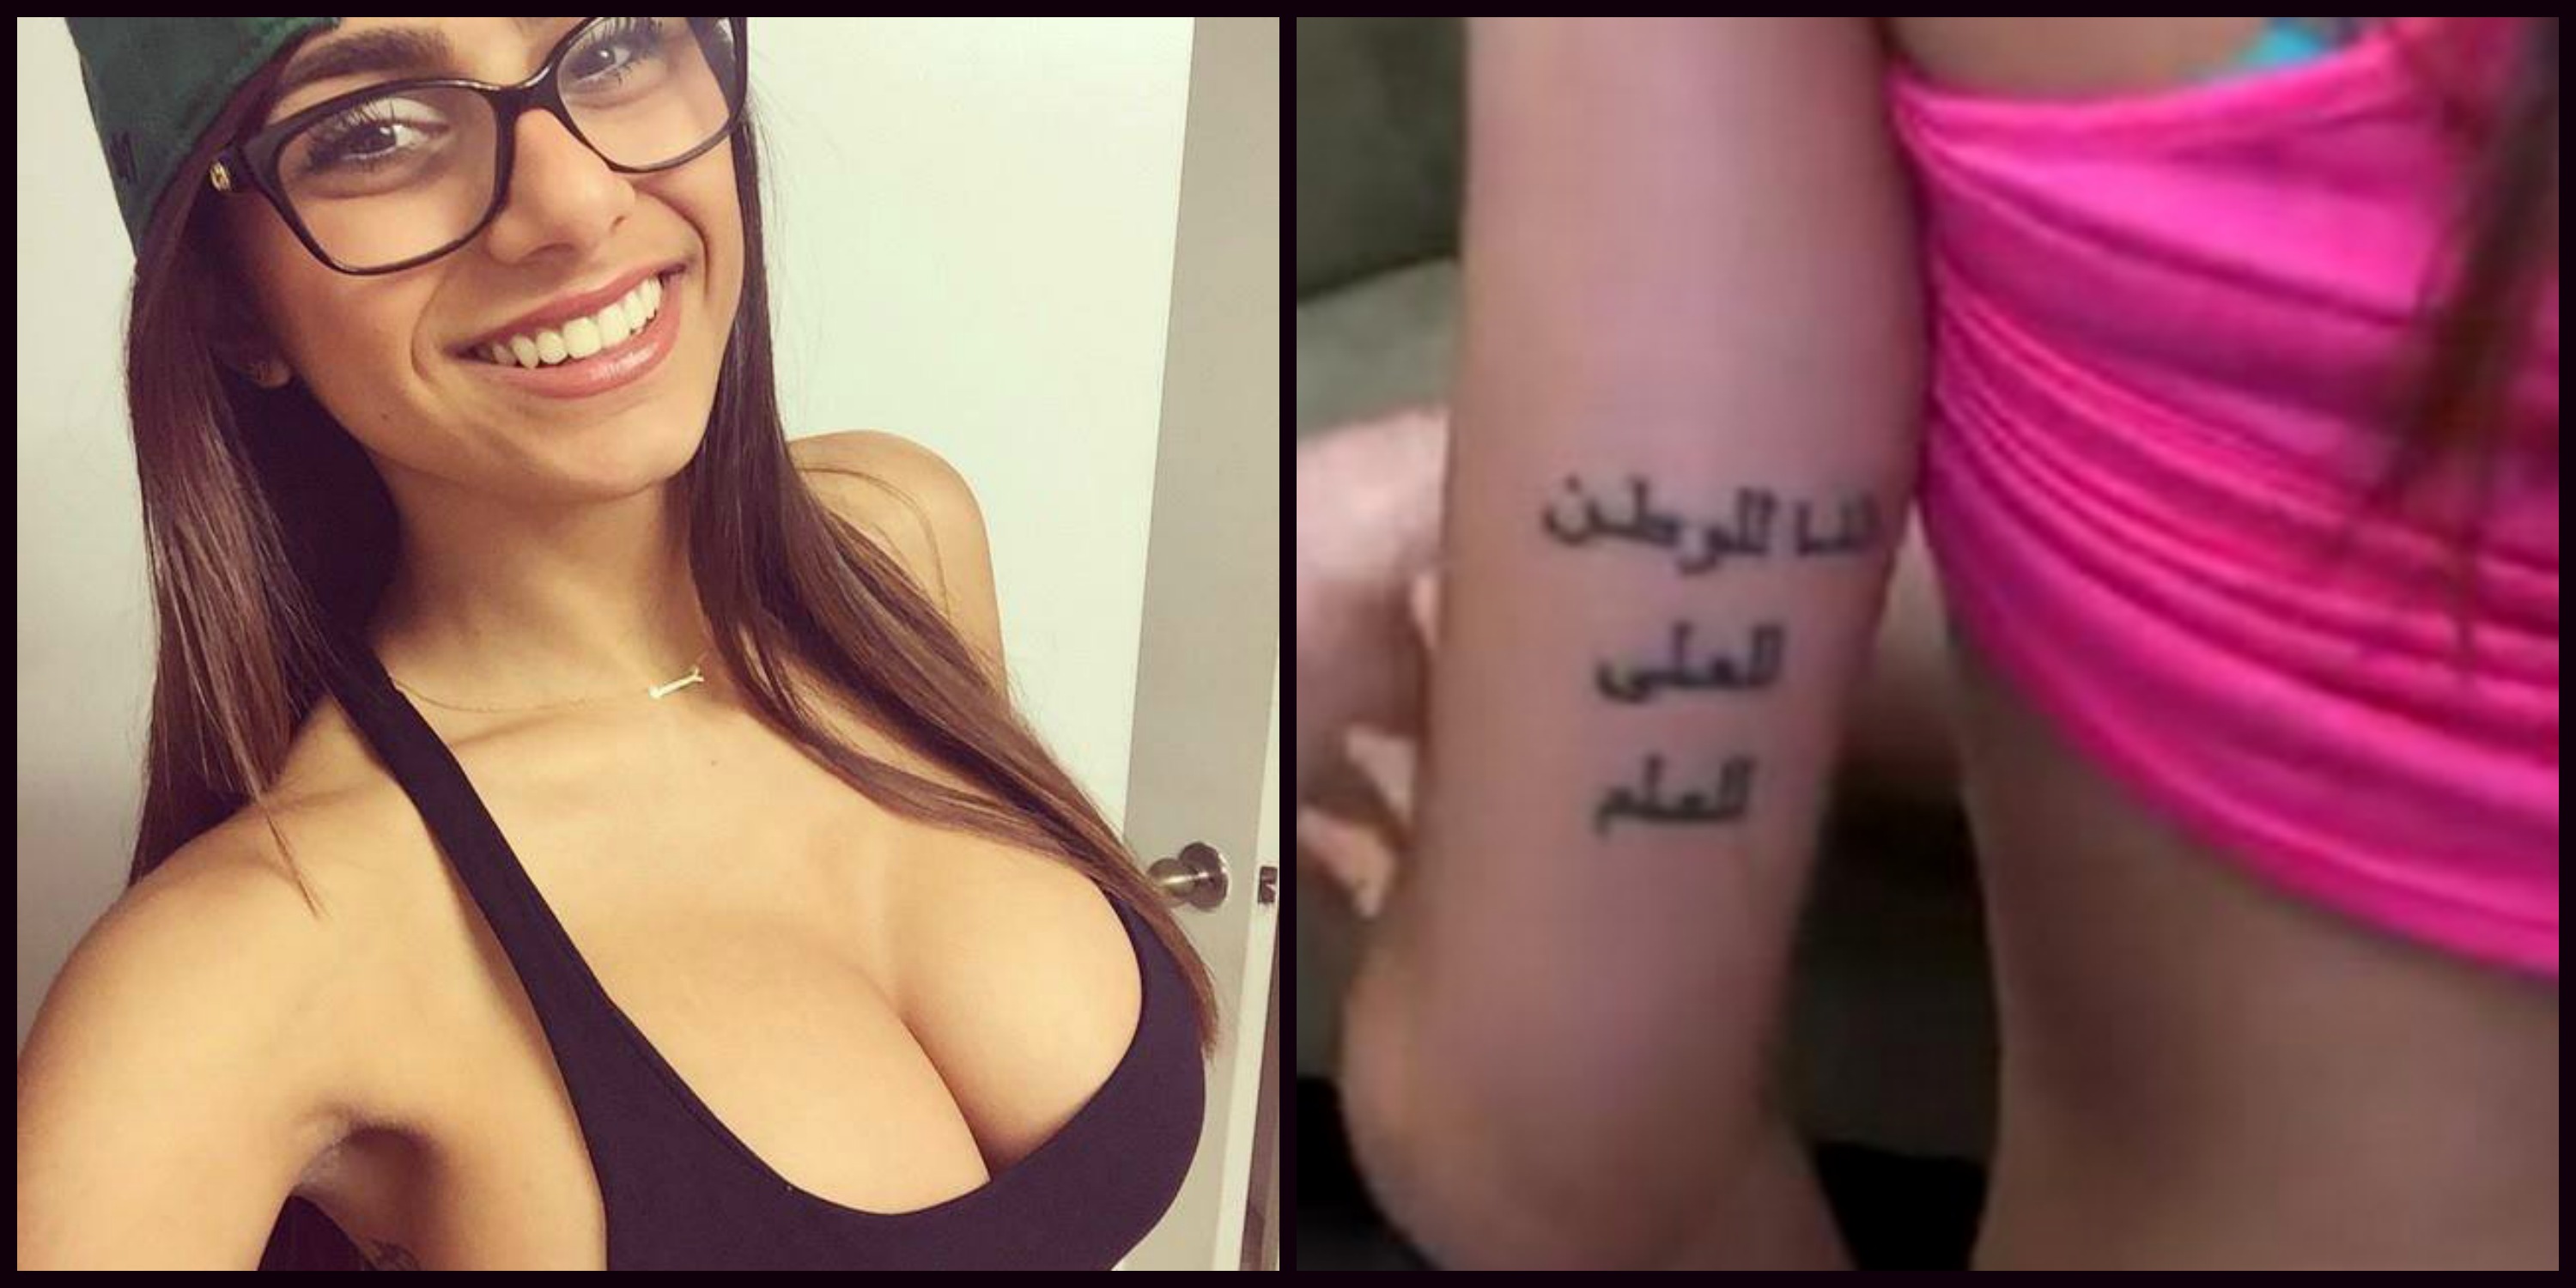 Lebanese porn star Mia Khalifa sparks controversy in Lebanon